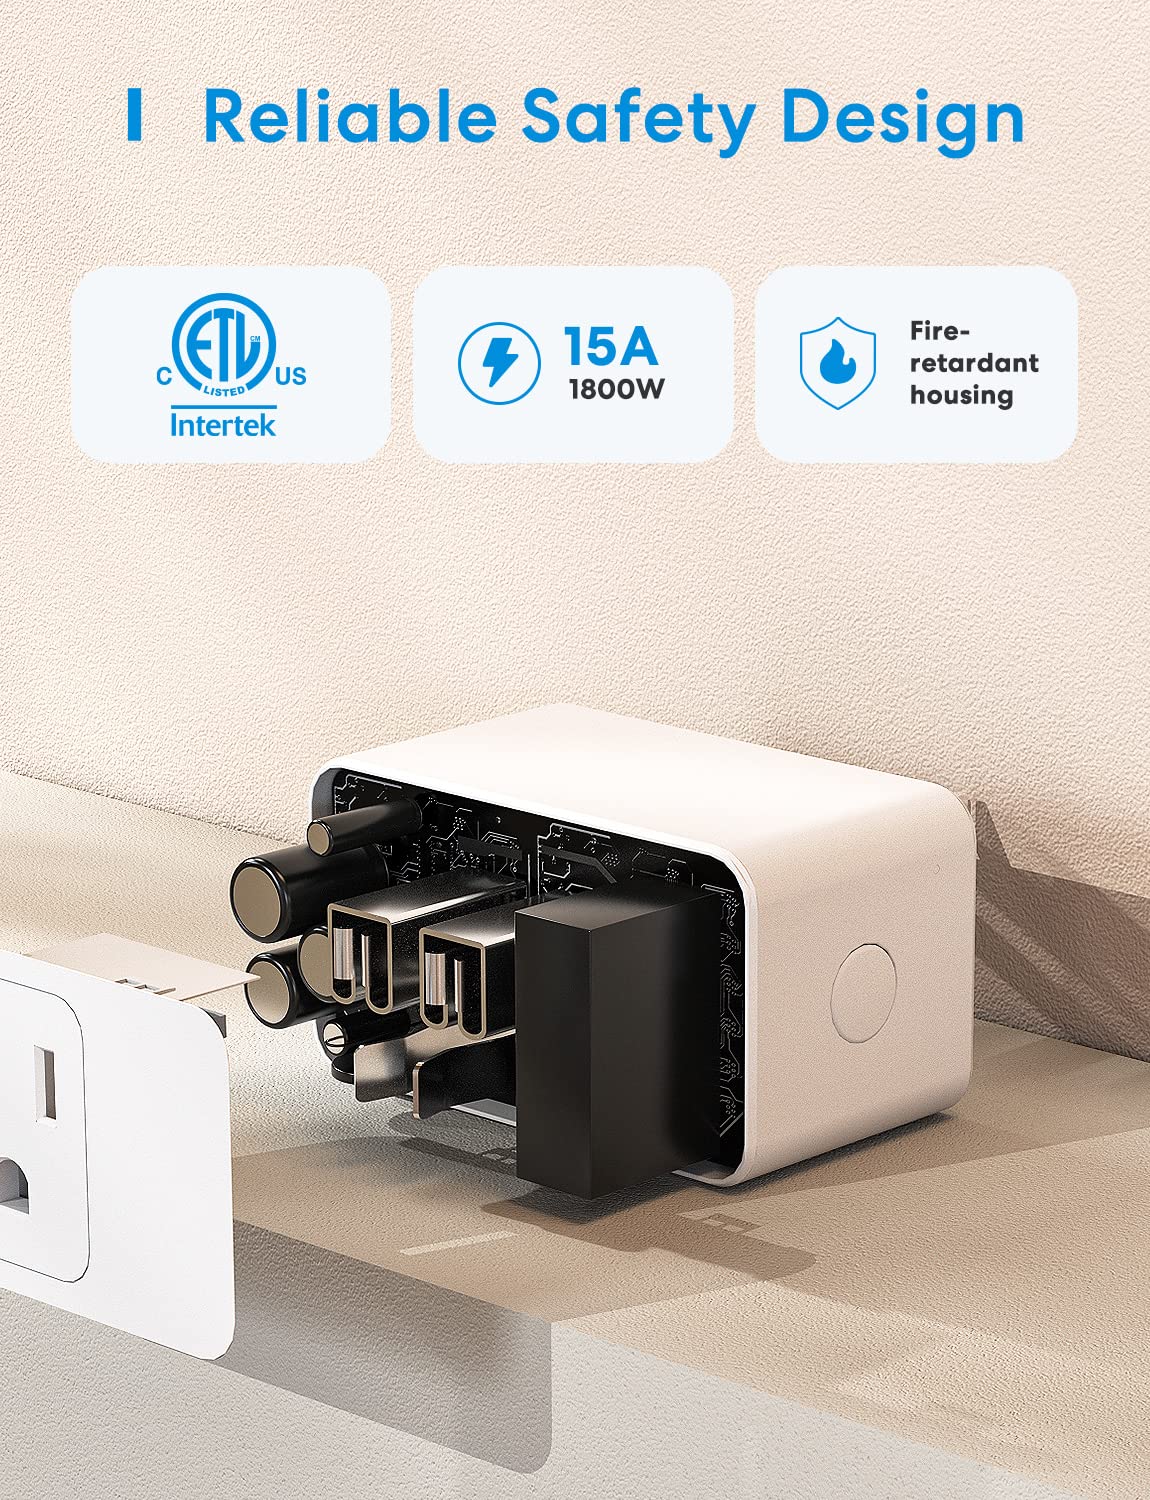 Meross Smart Plug Mini Support Apple HomeKit, Siri, Alexa, App Control, Timer, 15A & Reliable Wi-Fi, No Hub Needed, 2.4G WiFi Only, 2 Pack